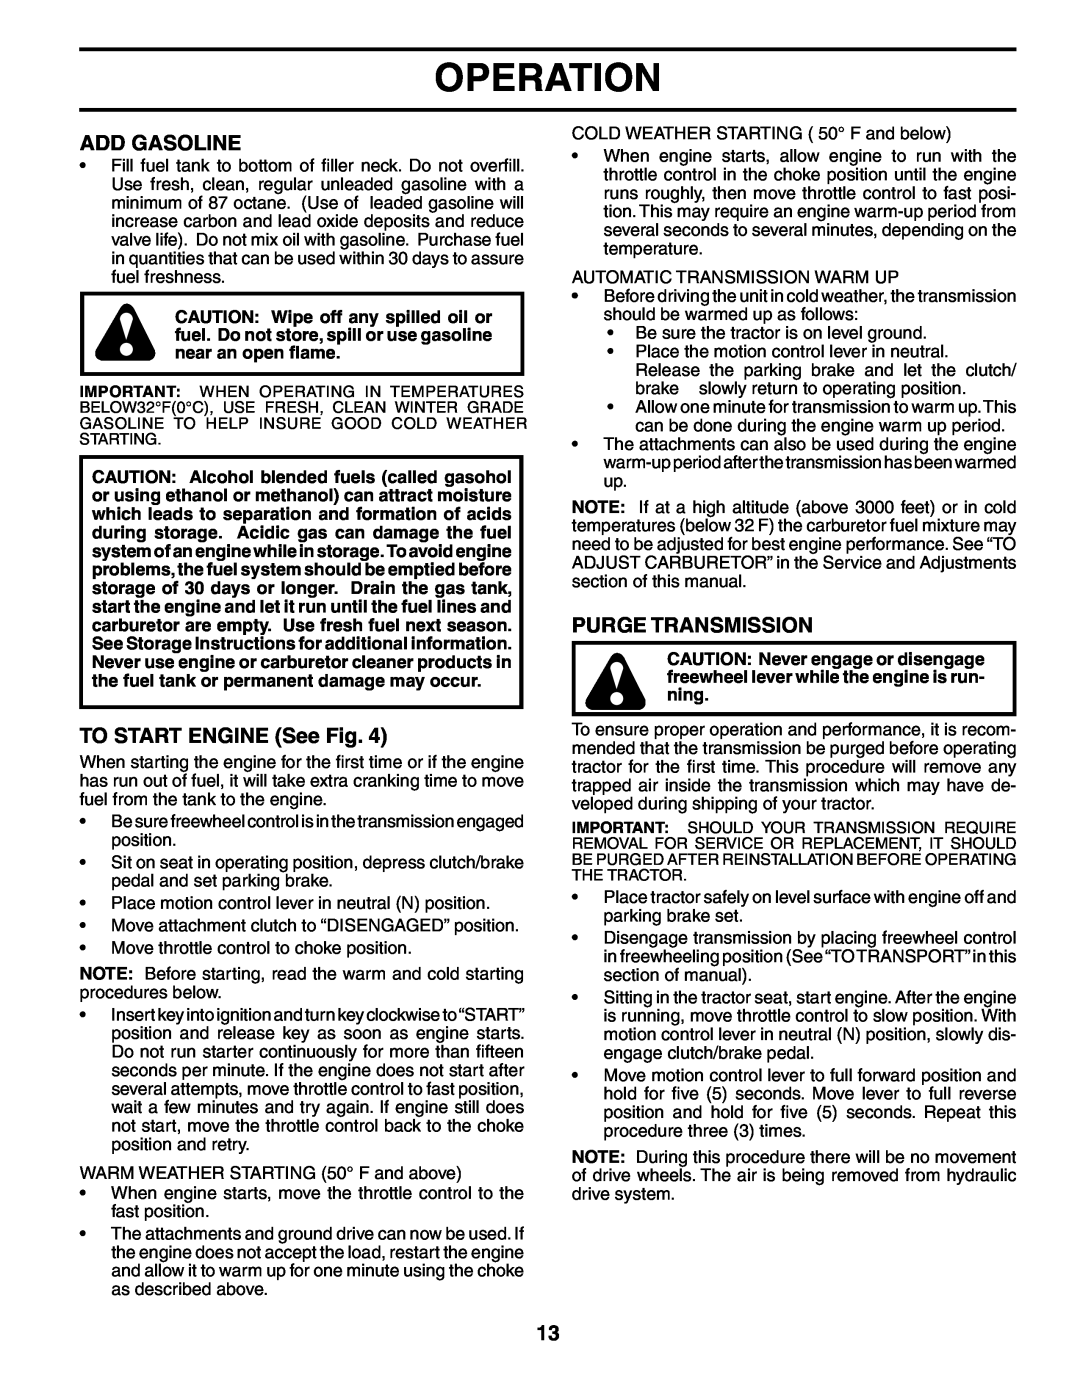 Poulan 187301 manual Add Gasoline, TO START ENGINE See Fig, Purge Transmission, Operation 